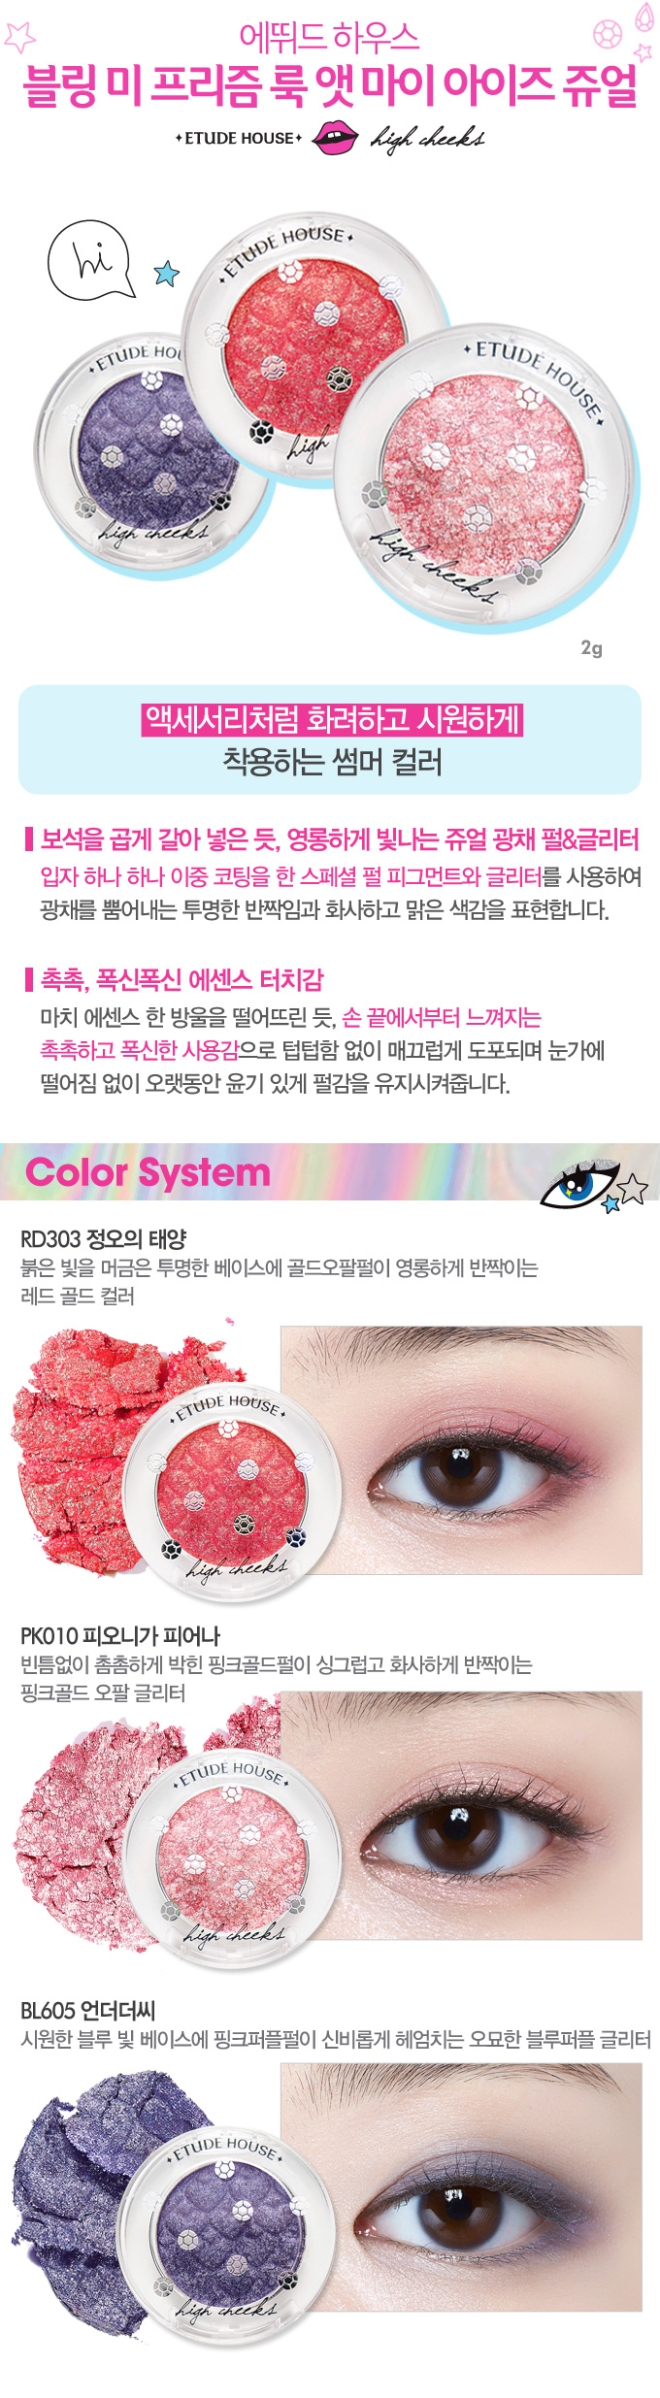 (Etude House x High Cheeks - Bling Me Prism Look At My Eyes Jewel) Credit: Etude House Korea website